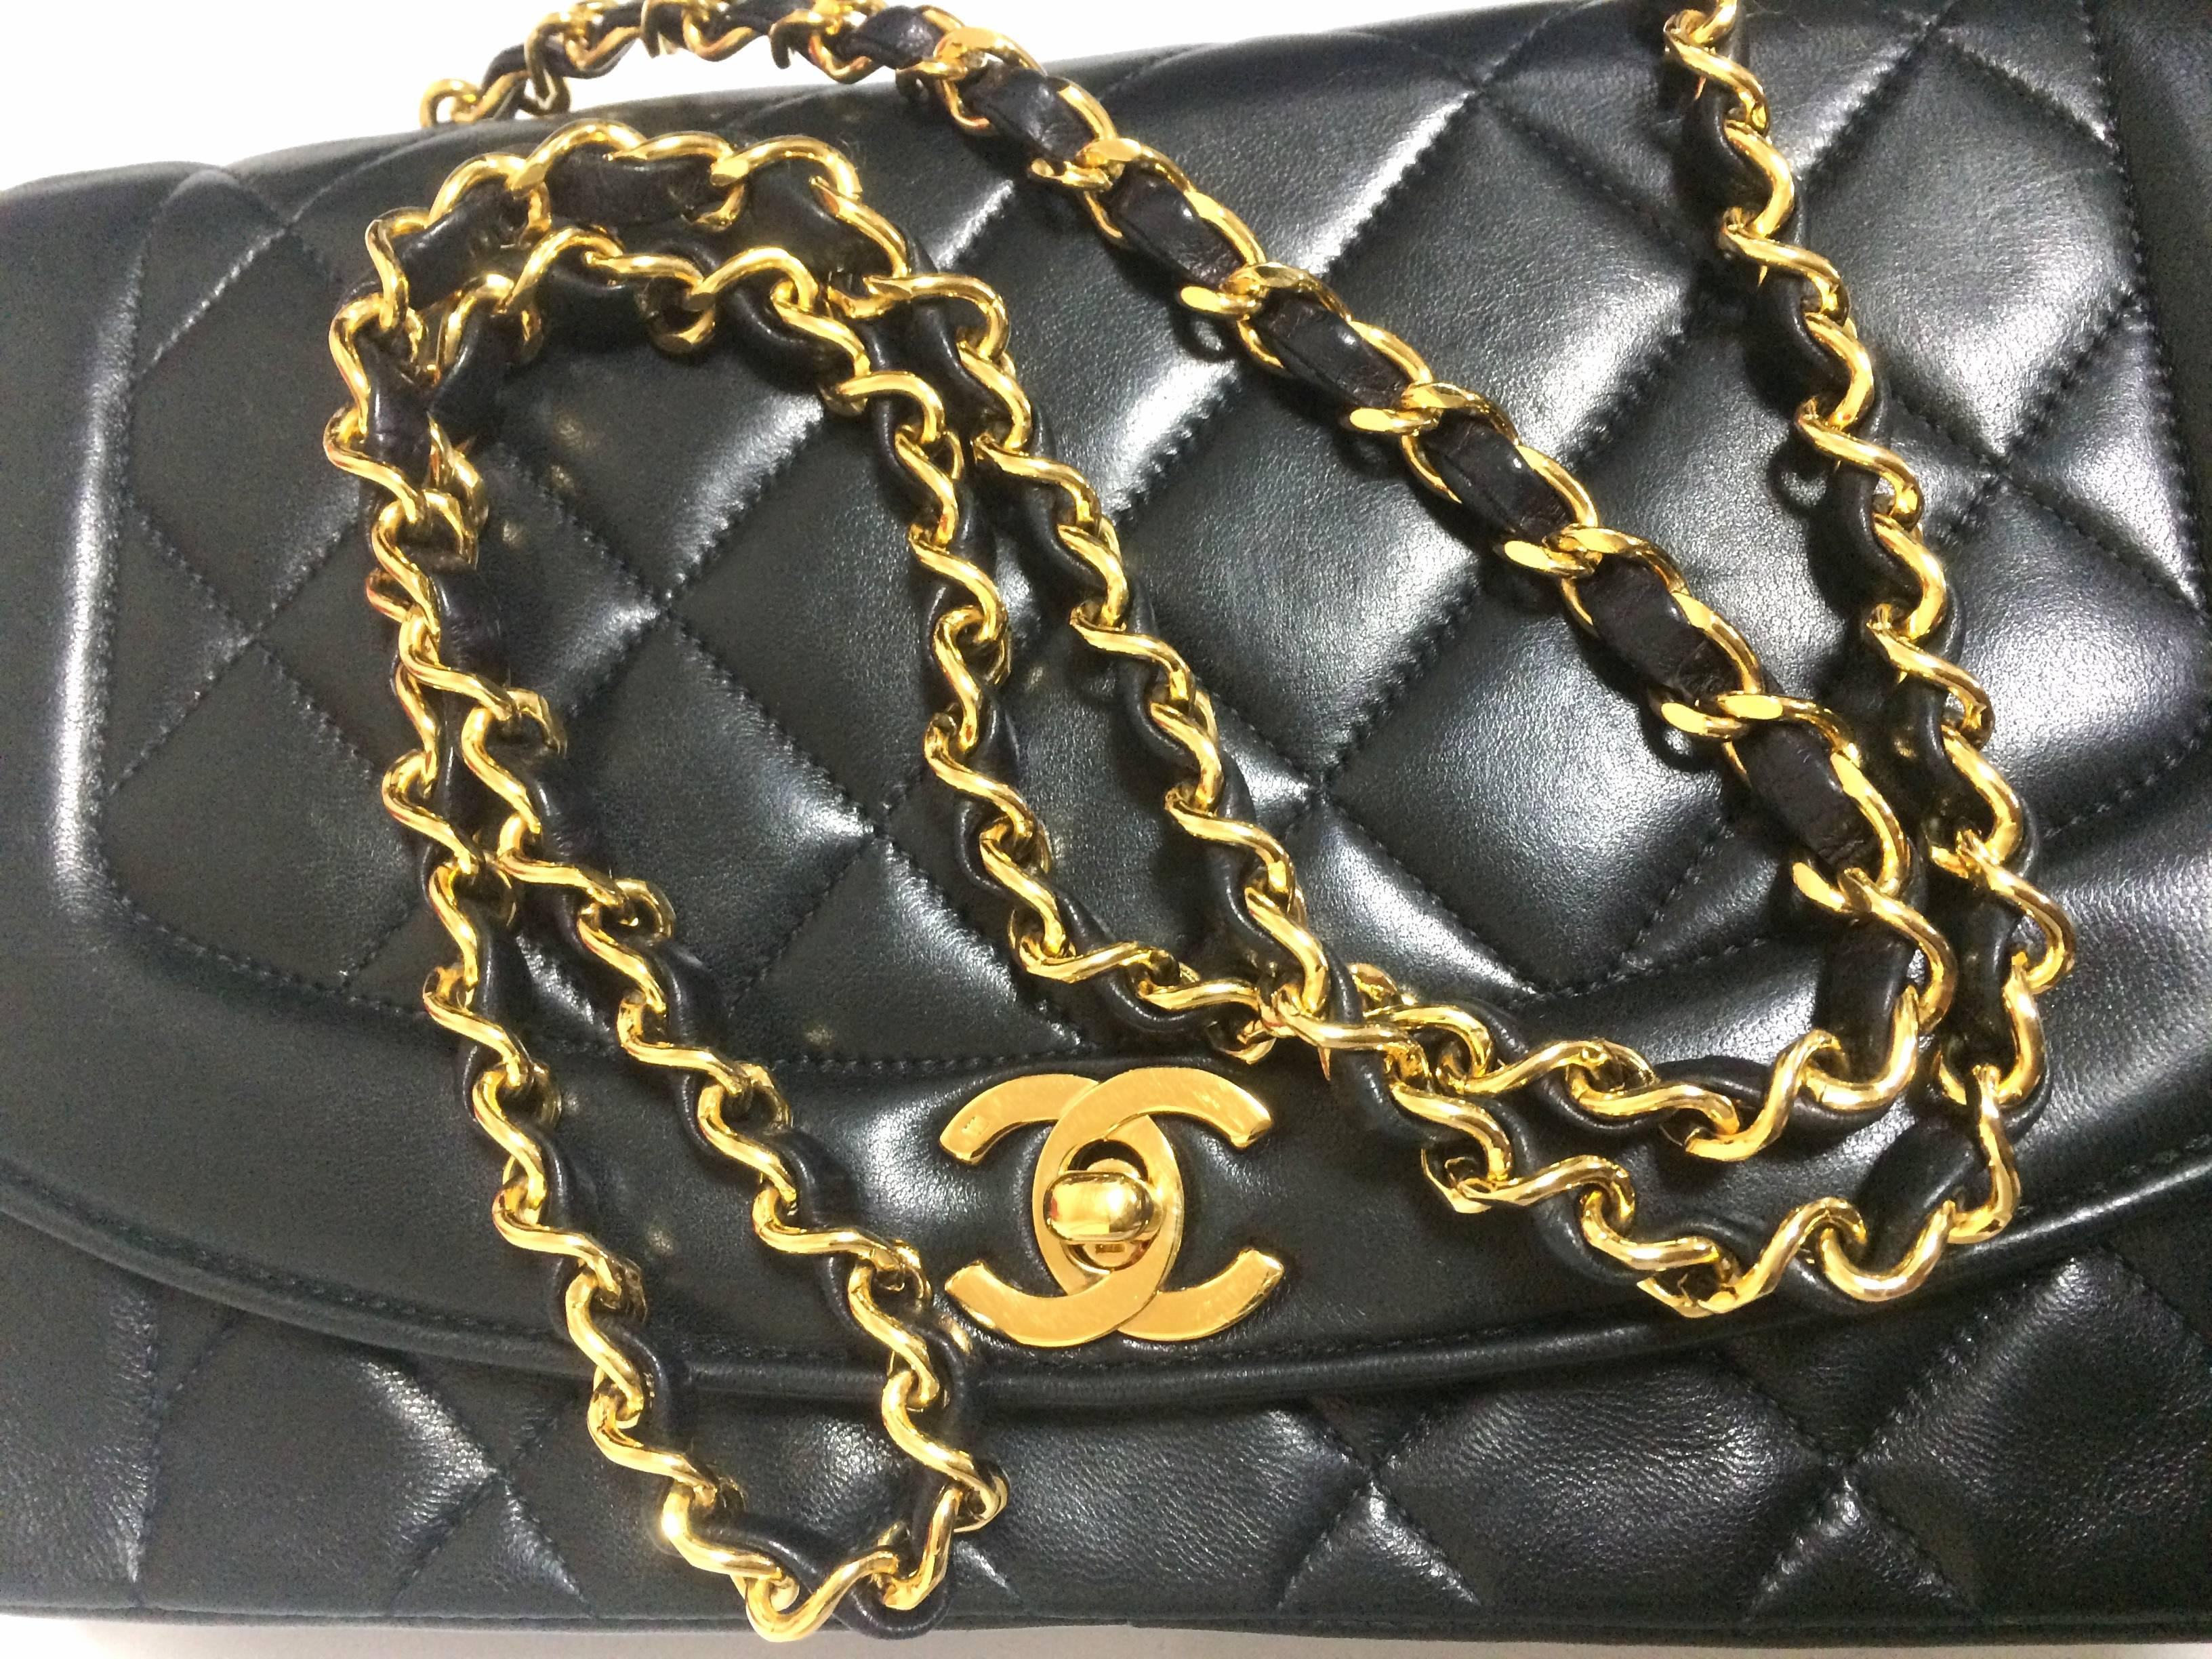 MINT. Vintage CHANEL black lambskin classic flap 2.55 gold chain shoulder bag. 2